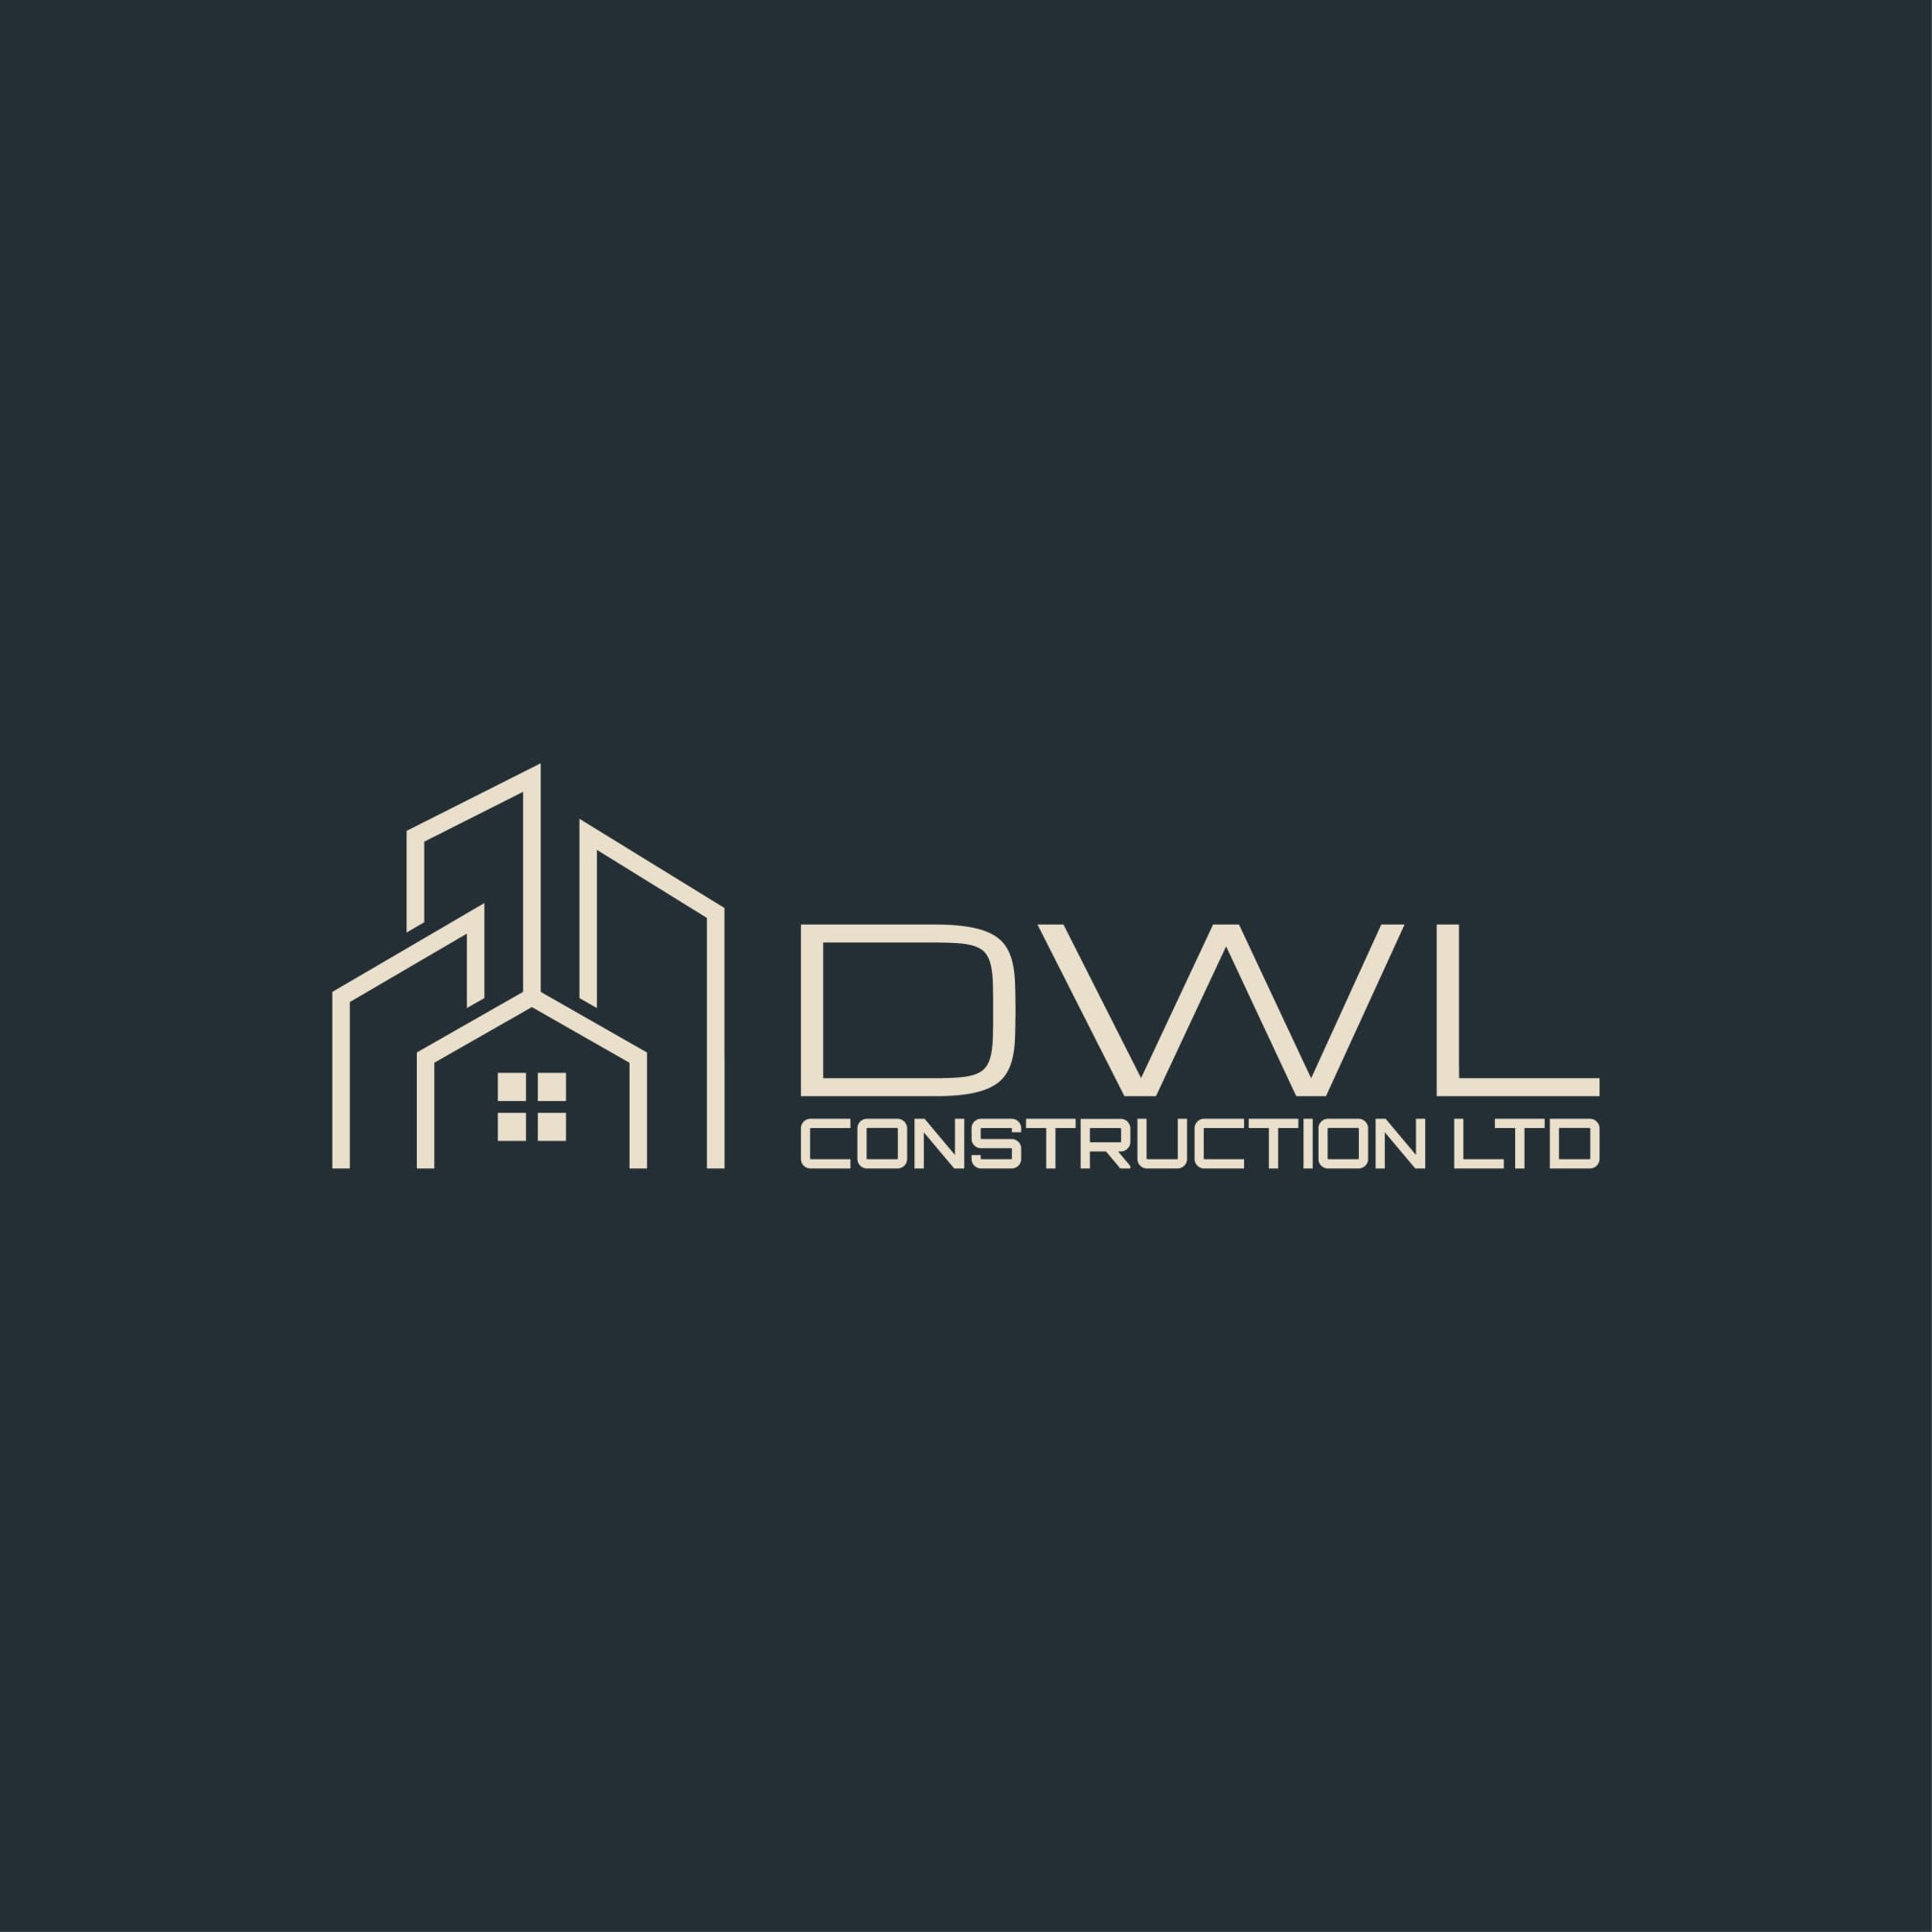 DWL Construction Ltd Logo